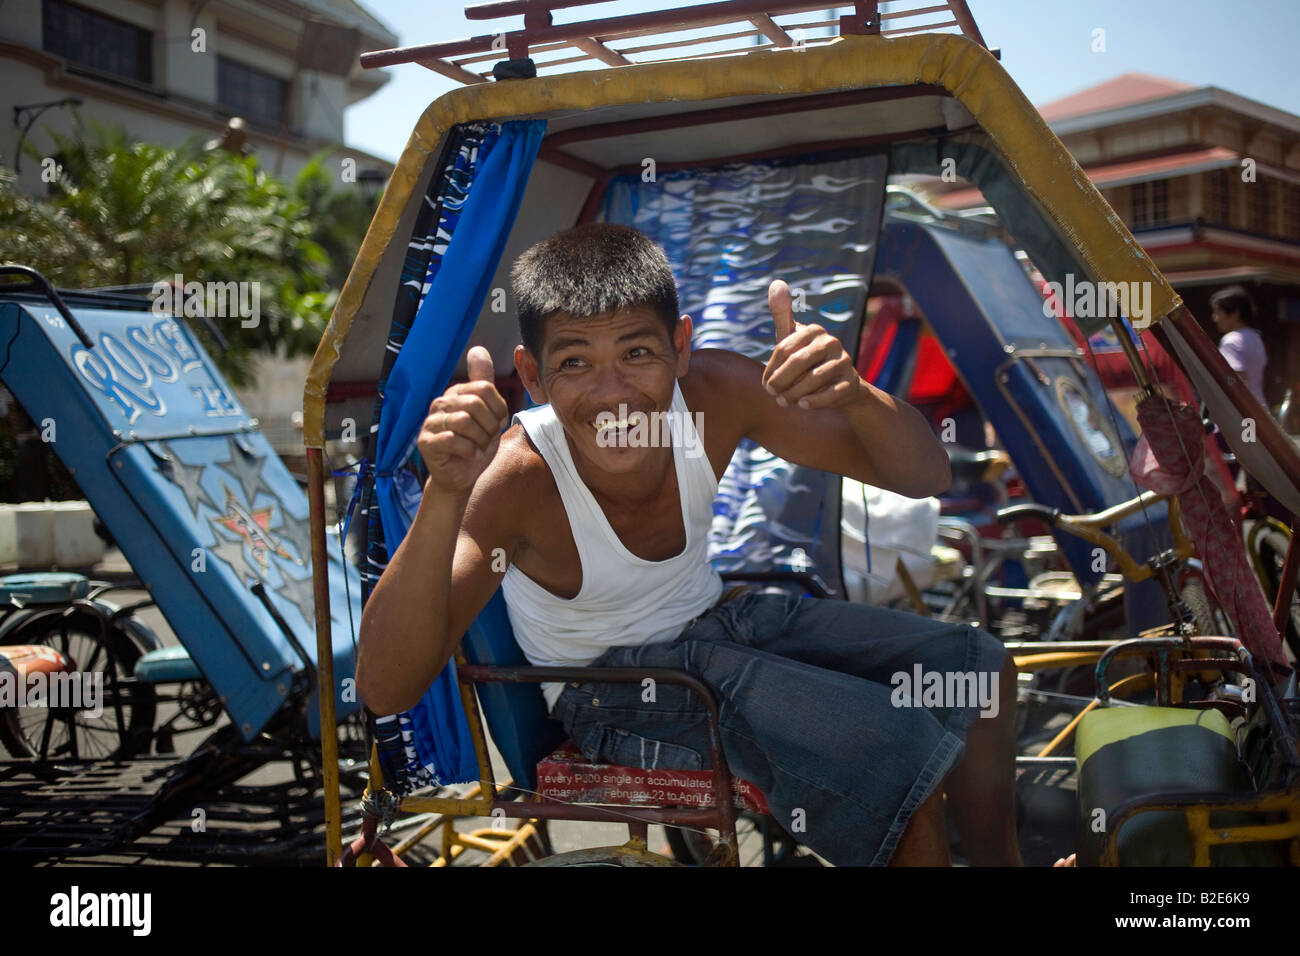 A pedi tricycle driver in the Divisoria district of Metro Manila, Philippines. Stock Photo